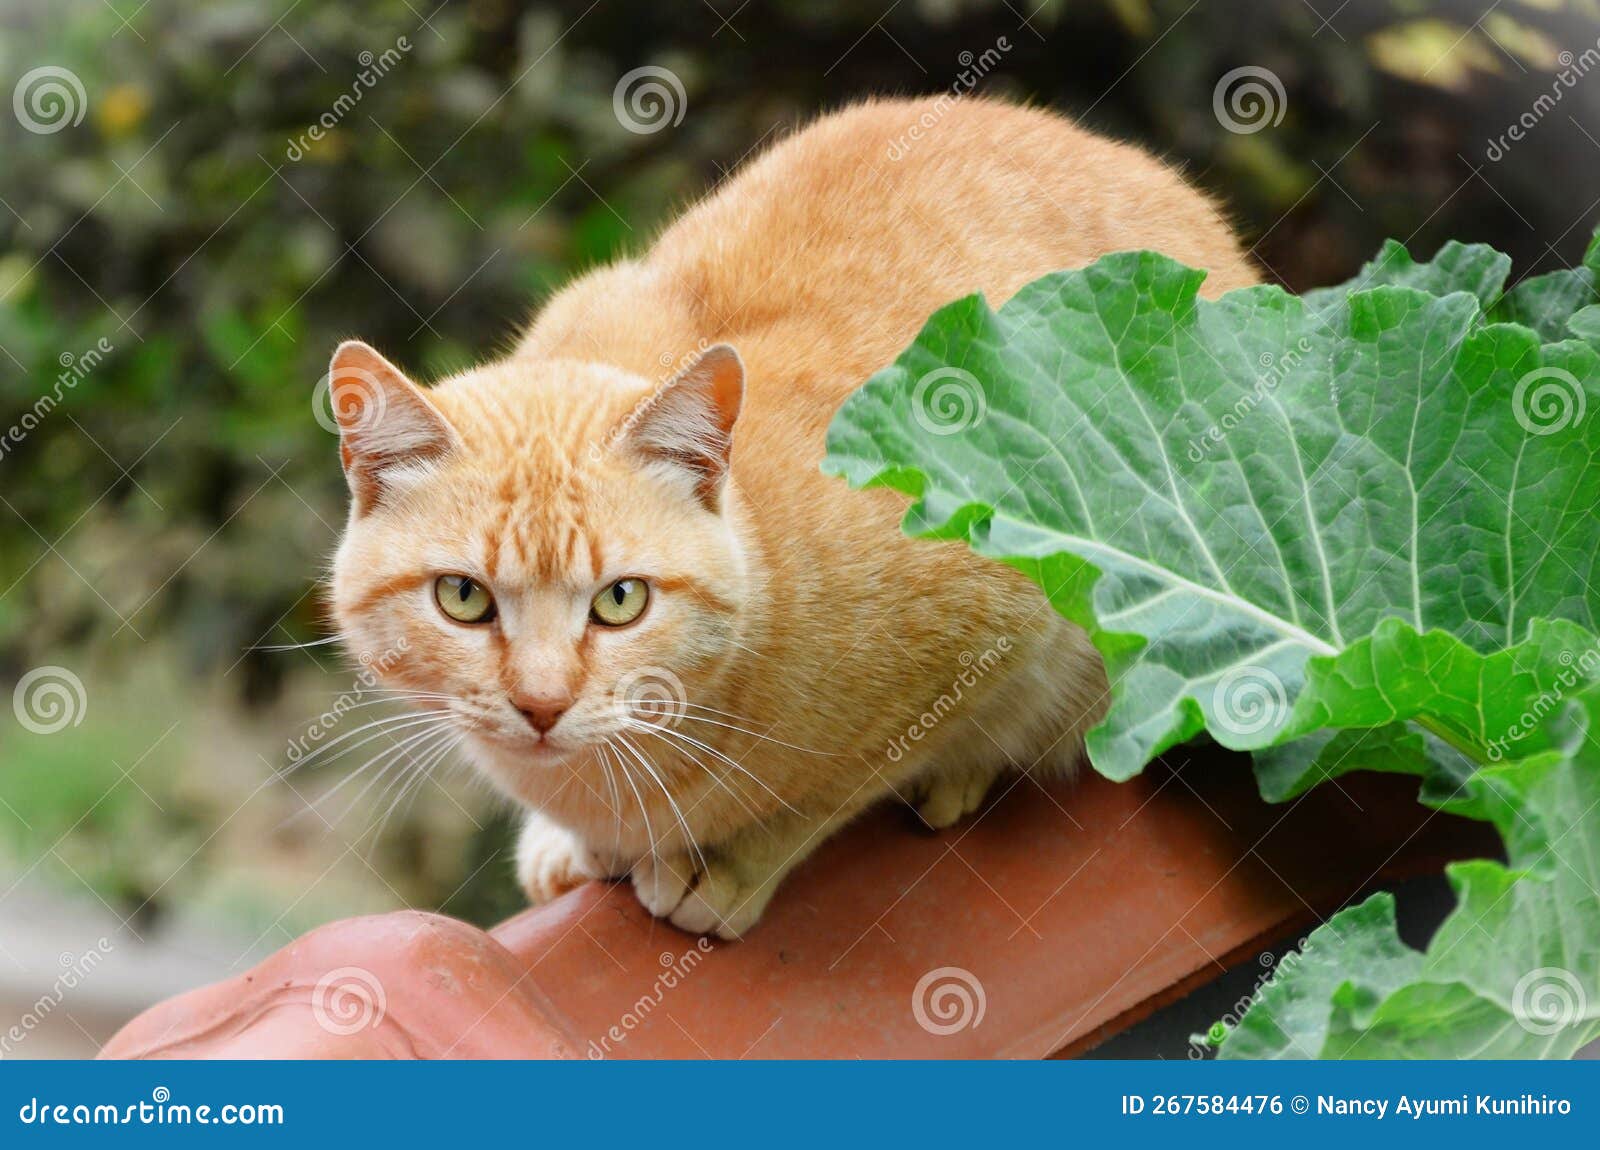 orange cat felis catus standing on the wall